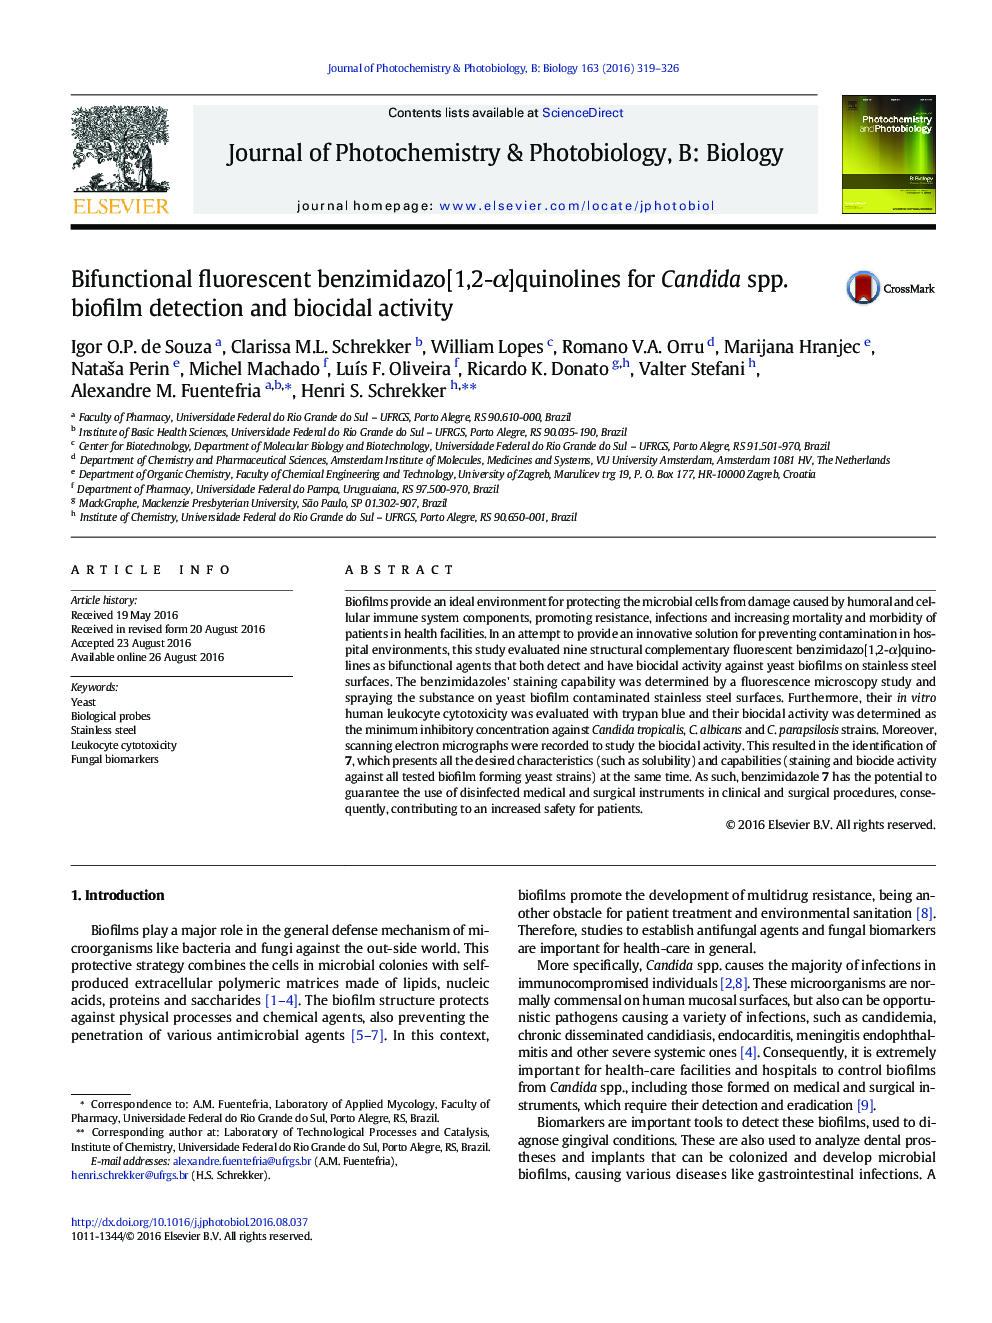 Bifunctional fluorescent benzimidazo[1,2-Î±]quinolines for Candida spp. biofilm detection and biocidal activity